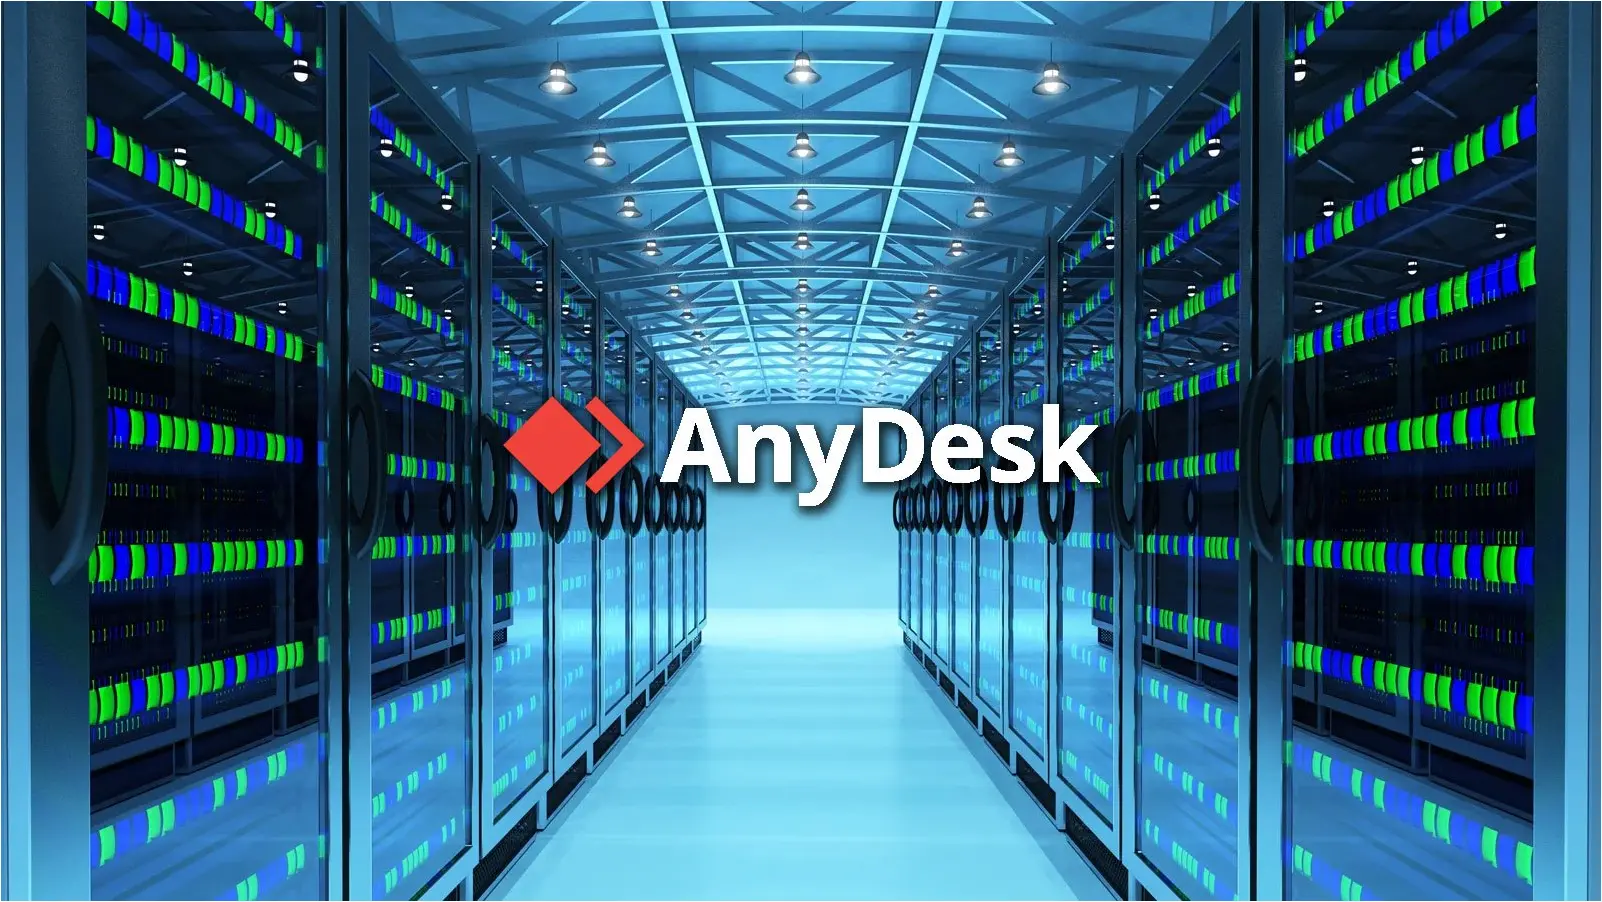 AnyDesk logo over a data center